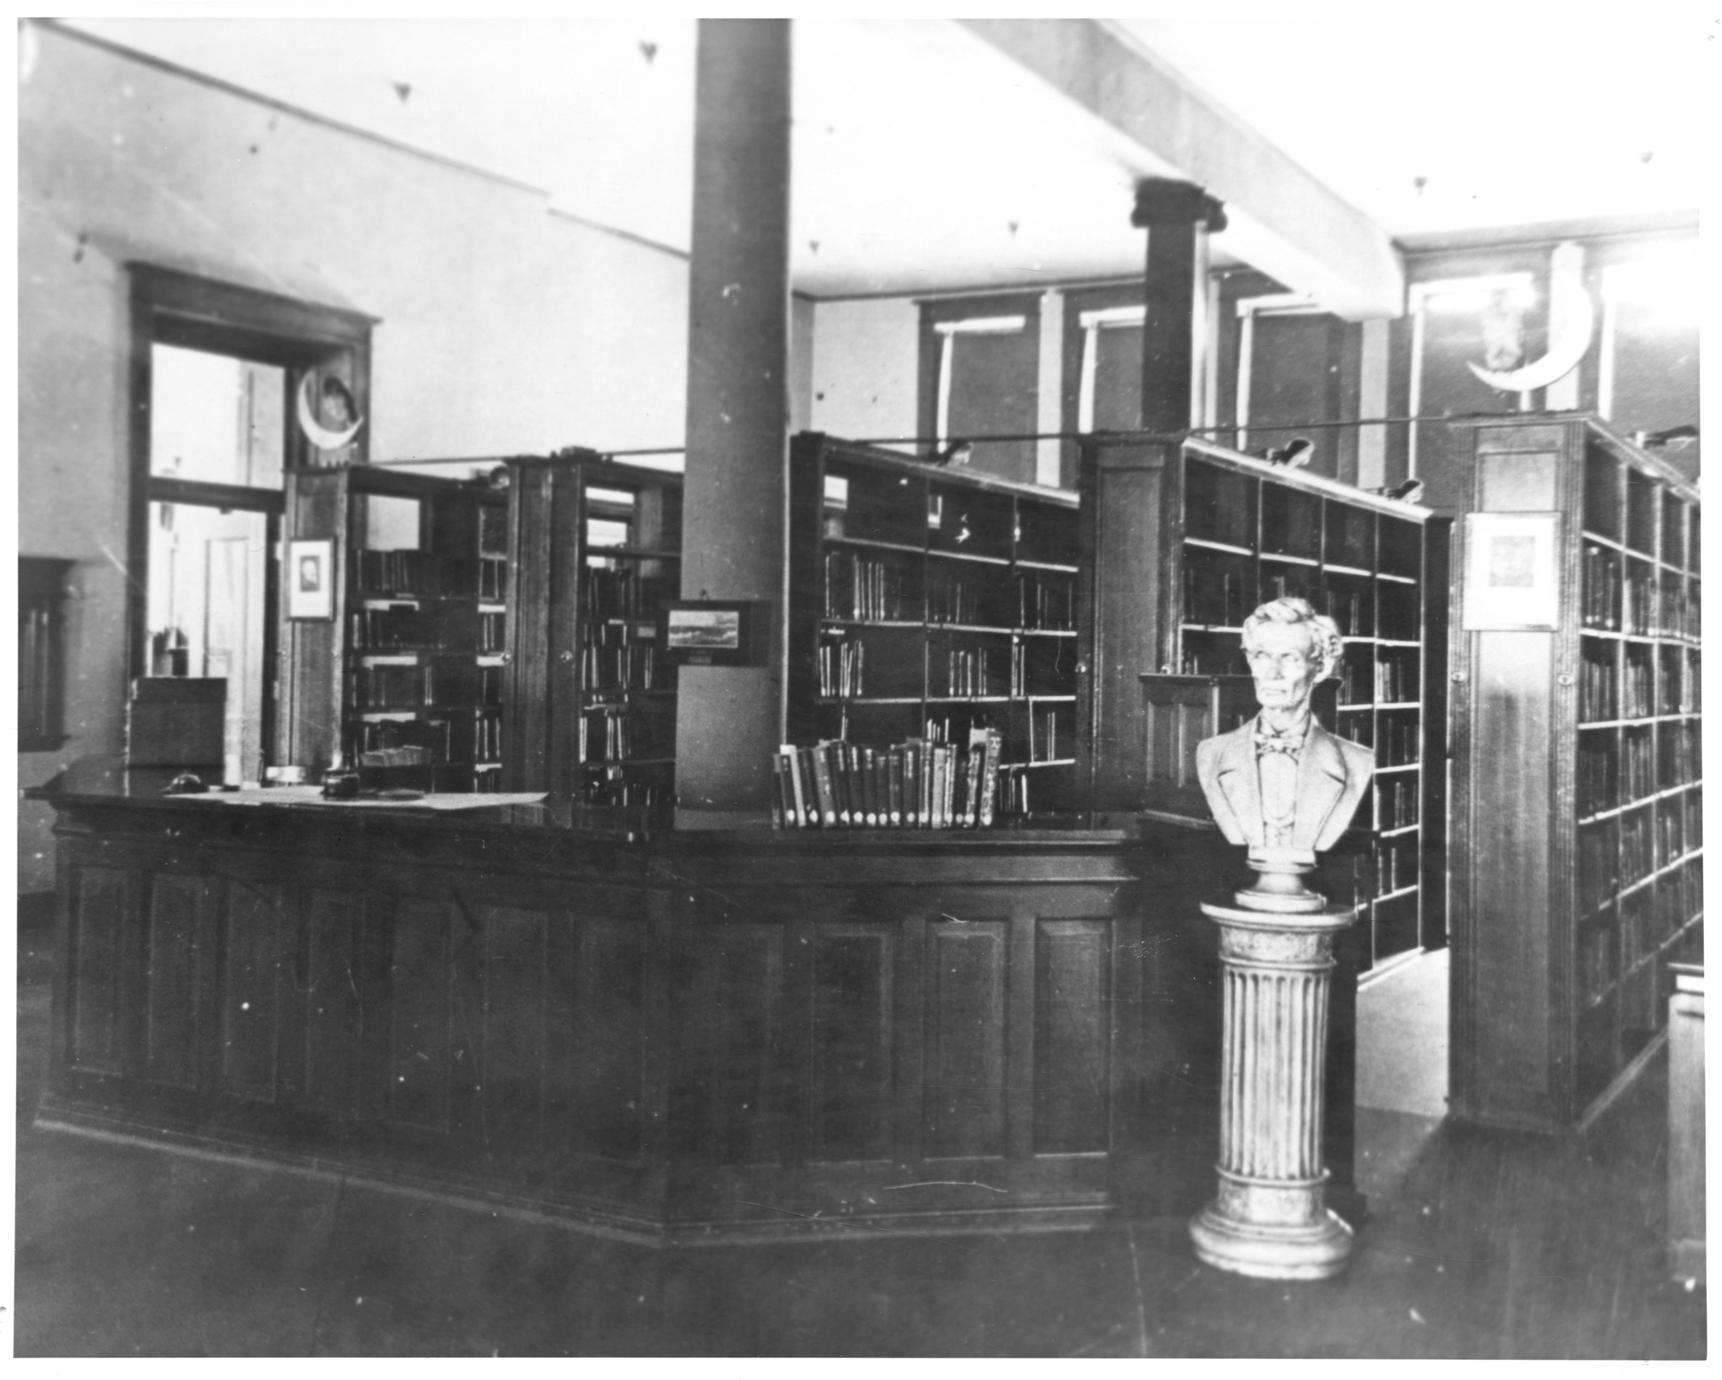 Janesville Public Library interior